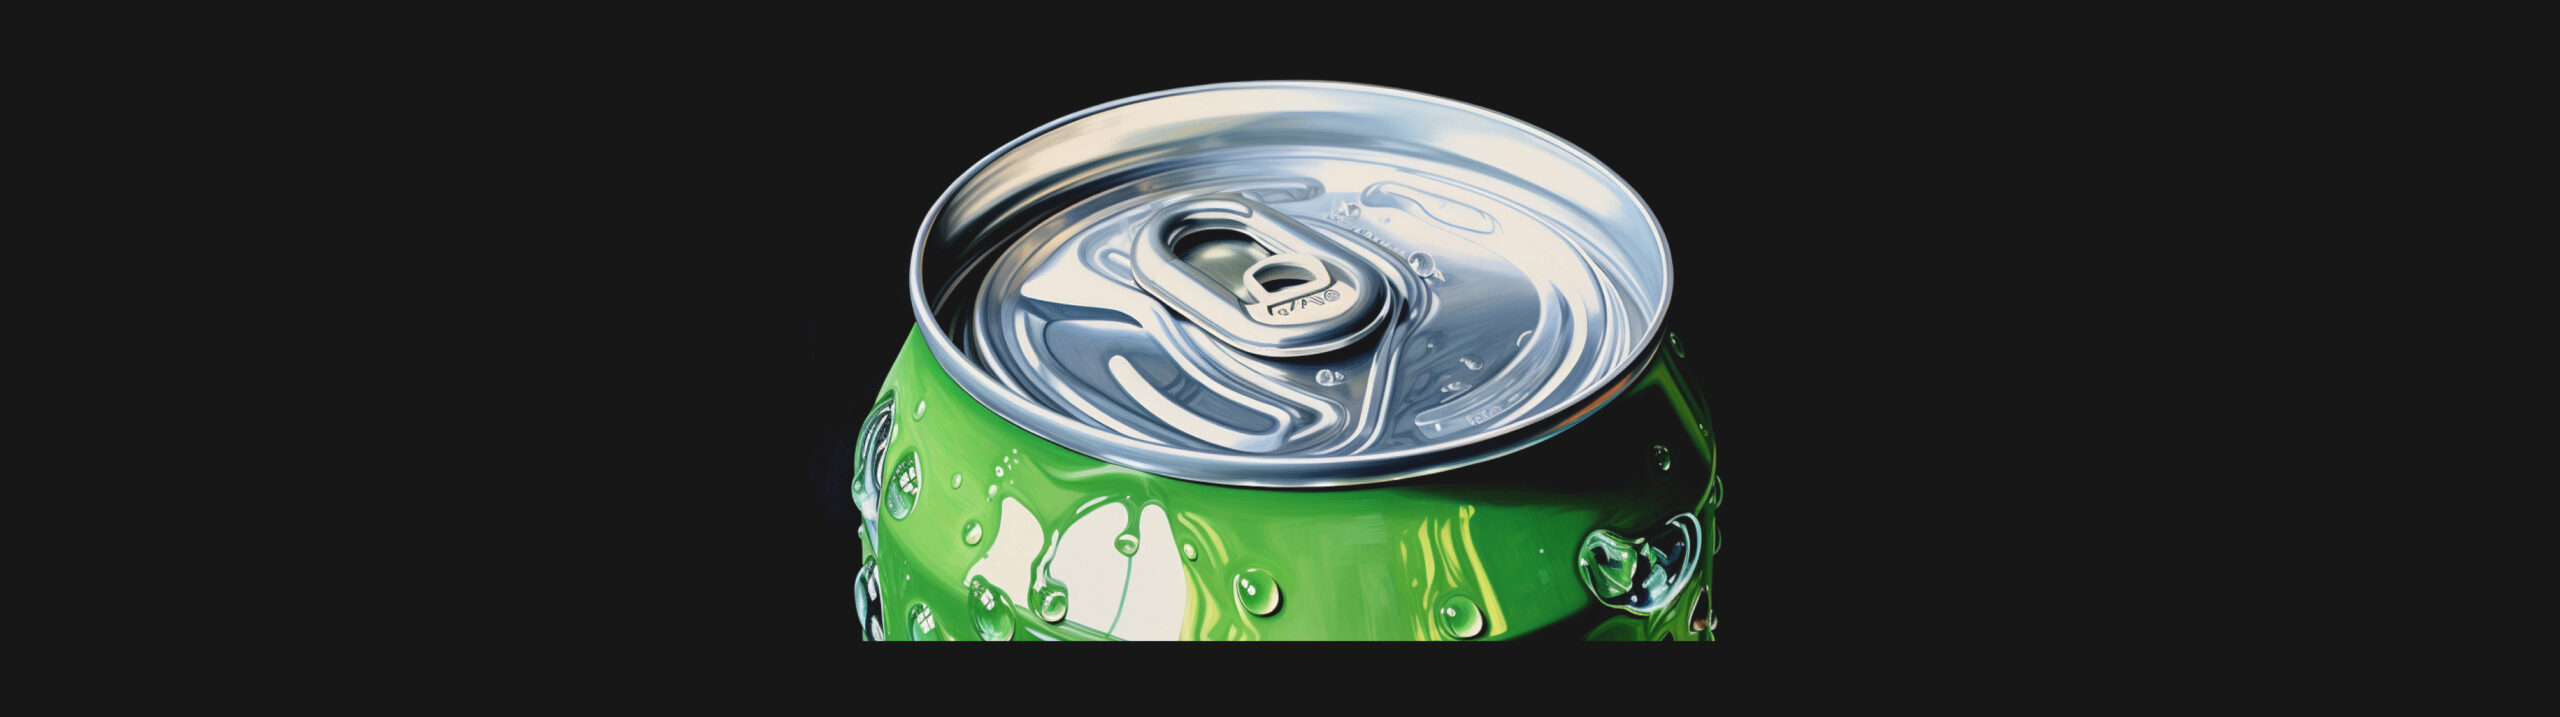 Heineken and BrewDog: a visual tale of two beer campaigns